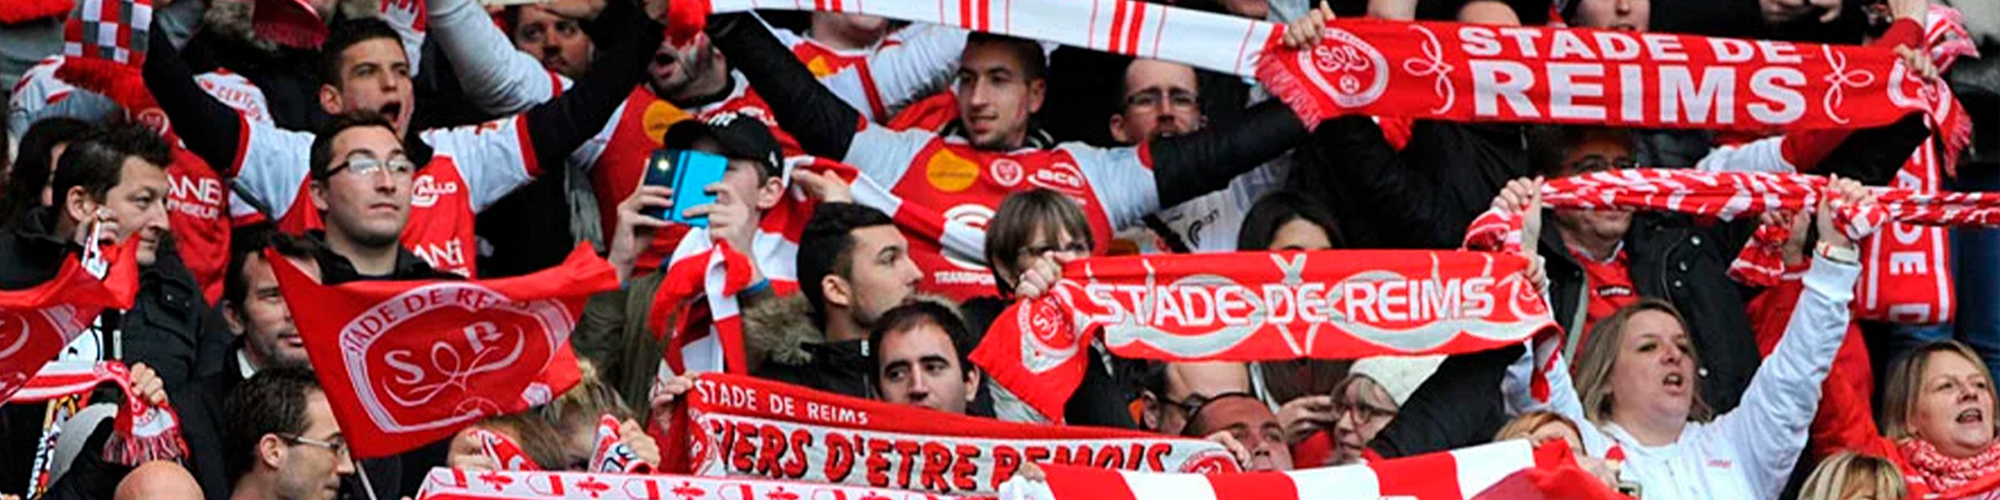 Stade de Reims Tickets & Experiences